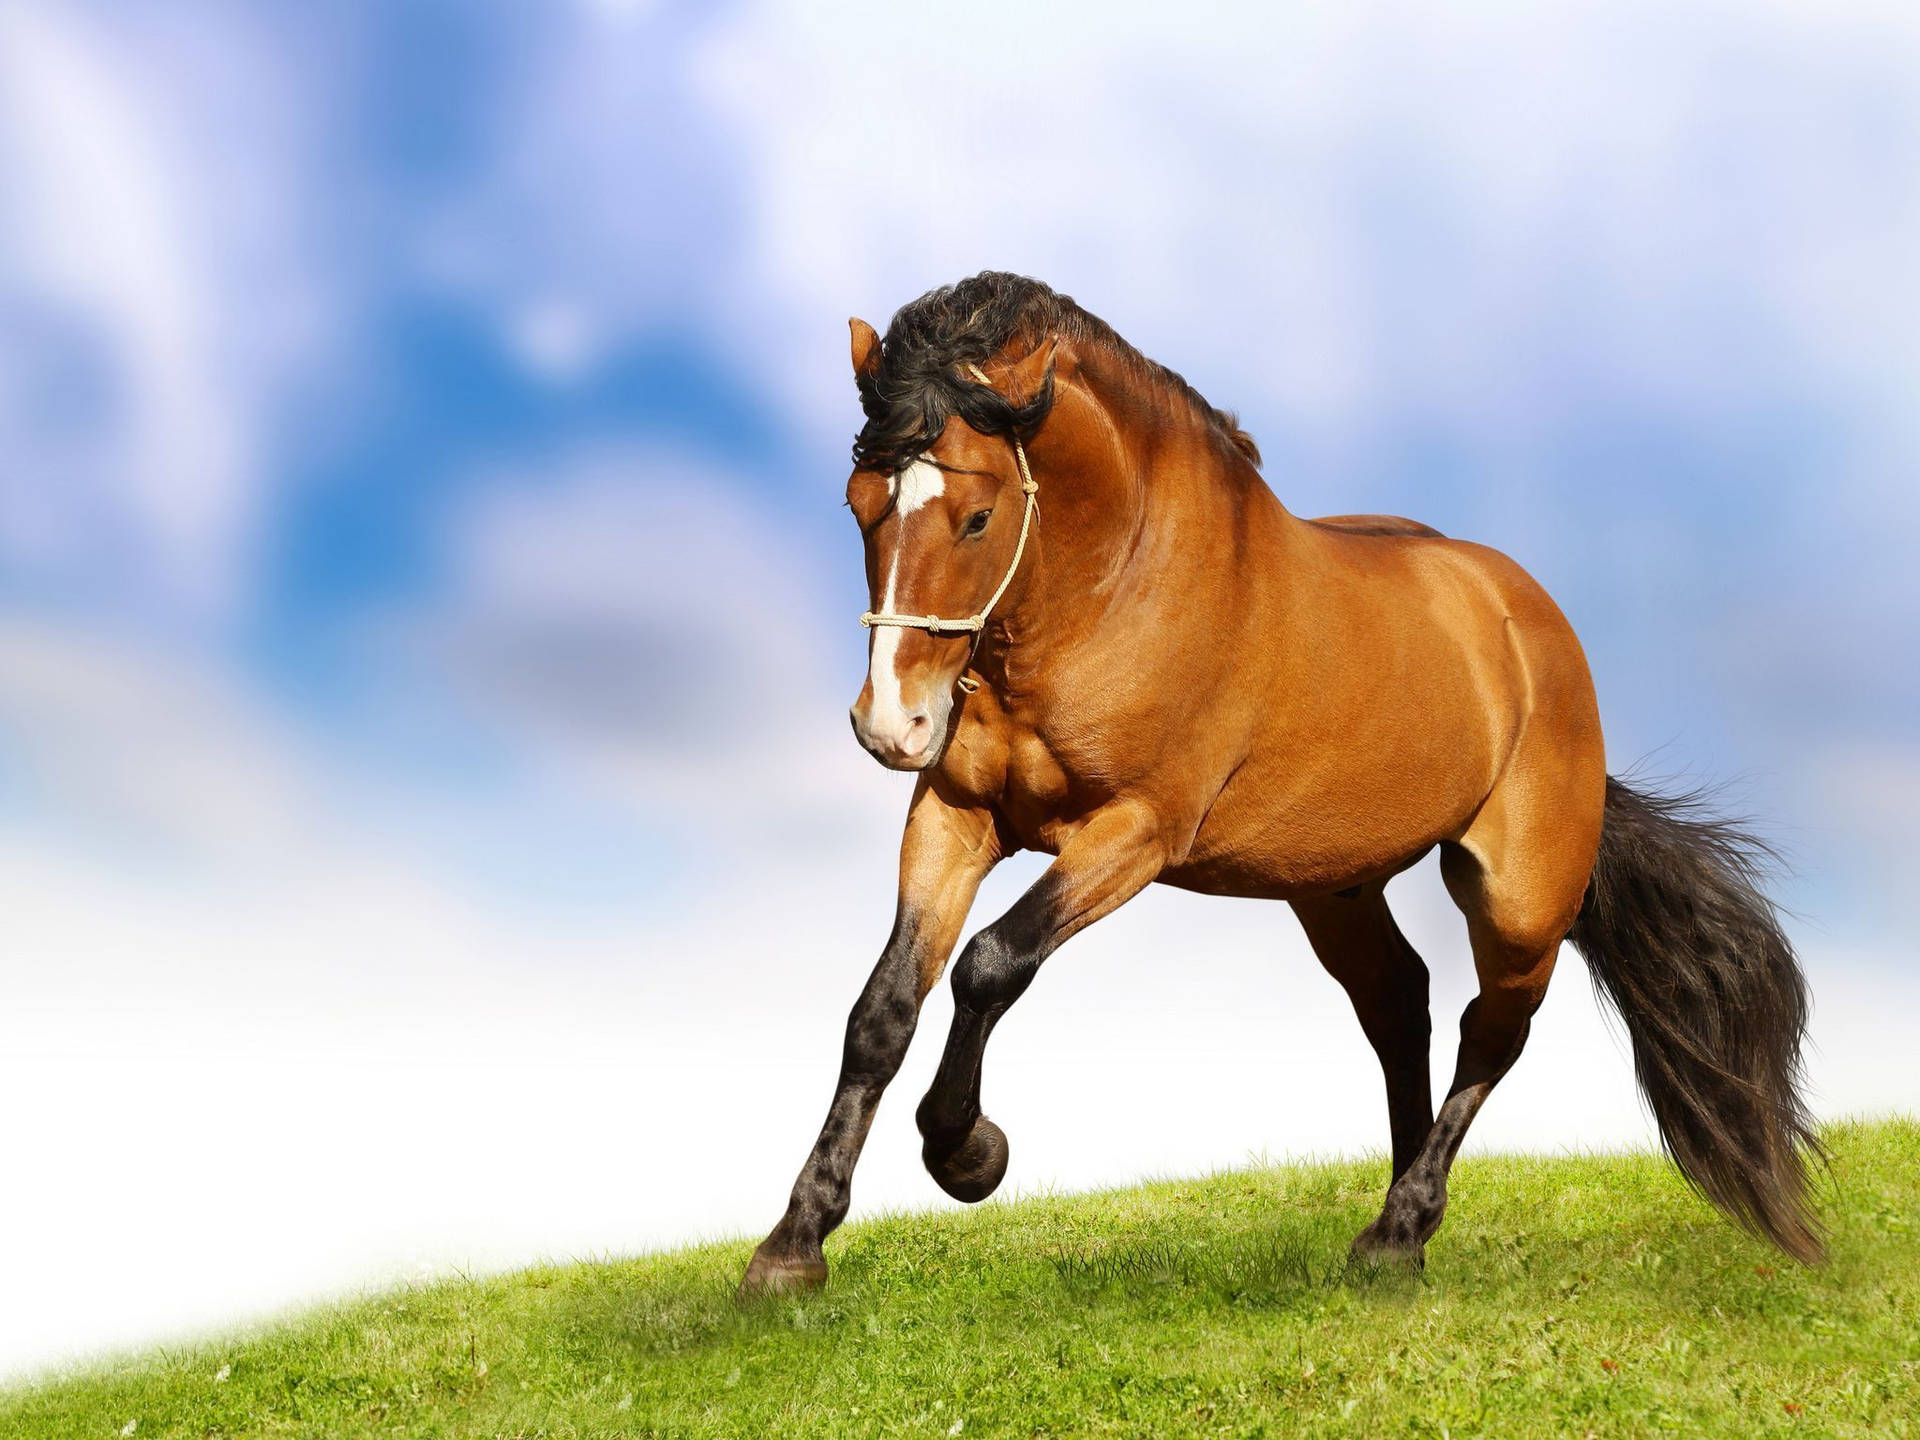 Cute Horse Running On Field Wallpaper